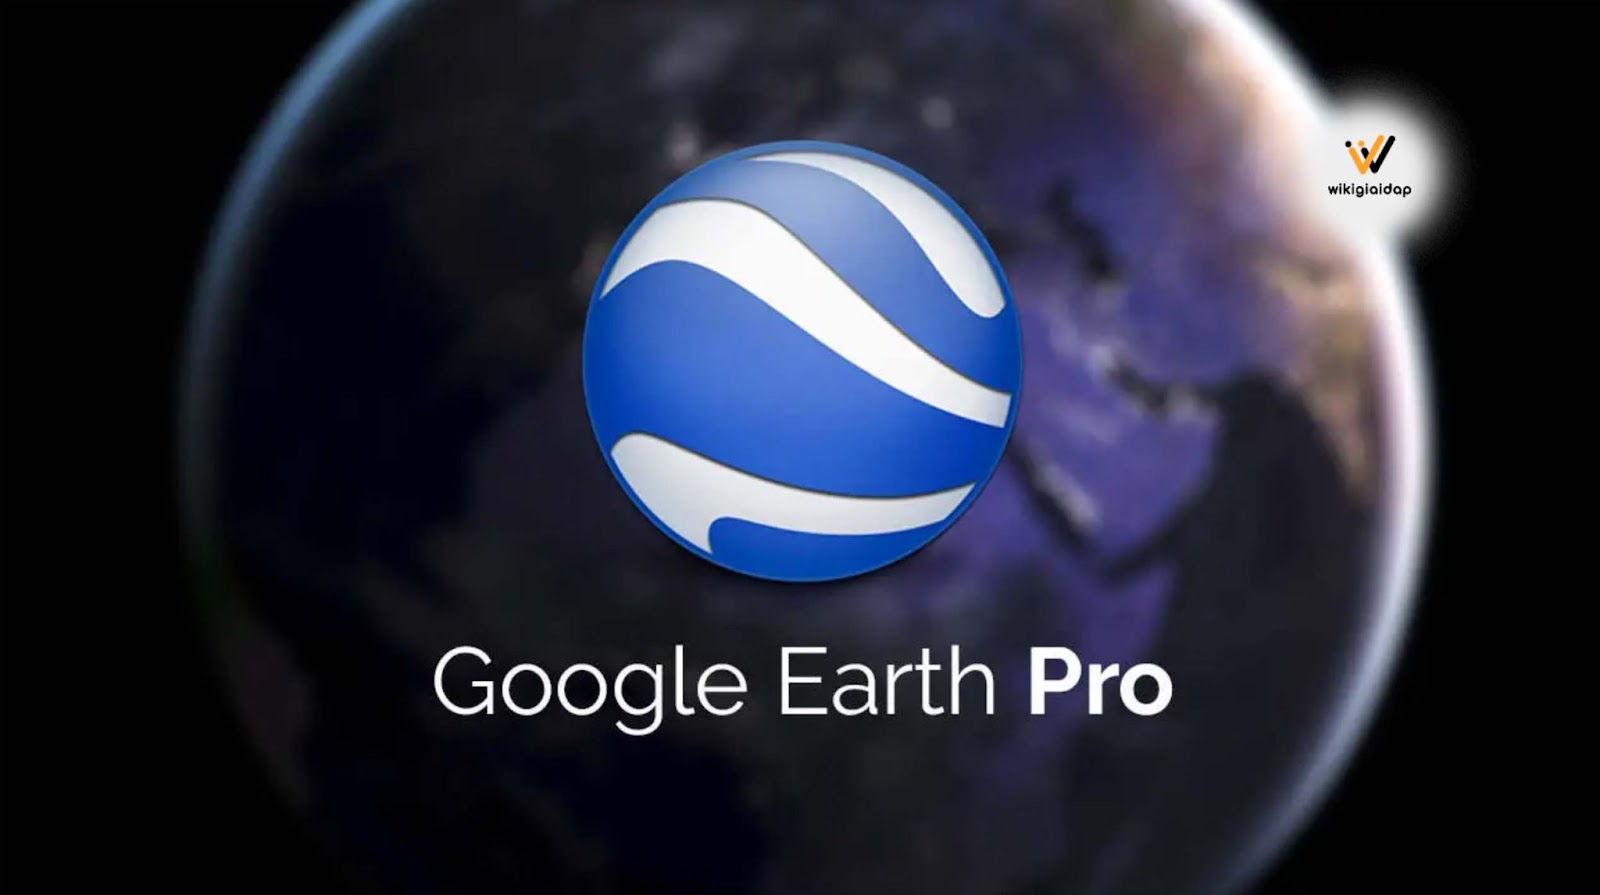 Giới thiệu về Google Earth